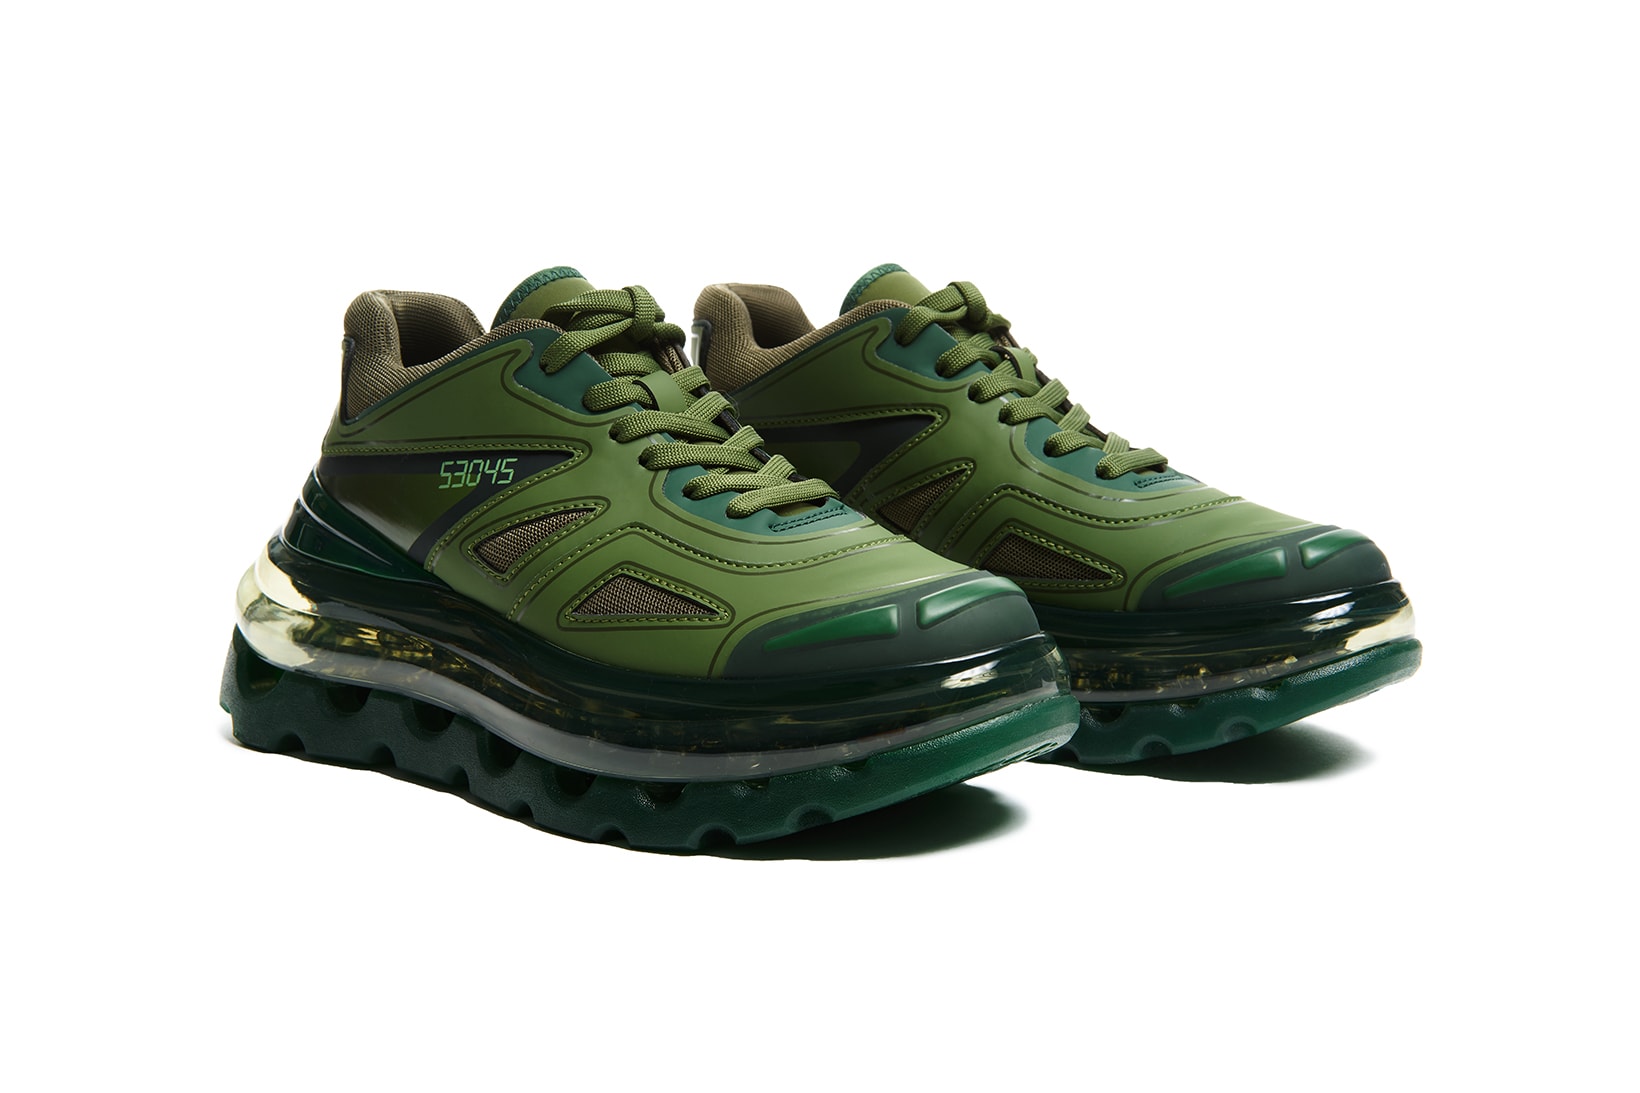 balenciaga triple s designer shoes 53045 bump air green giant sneakers footwear sneakerhead david tourniaire beauciel